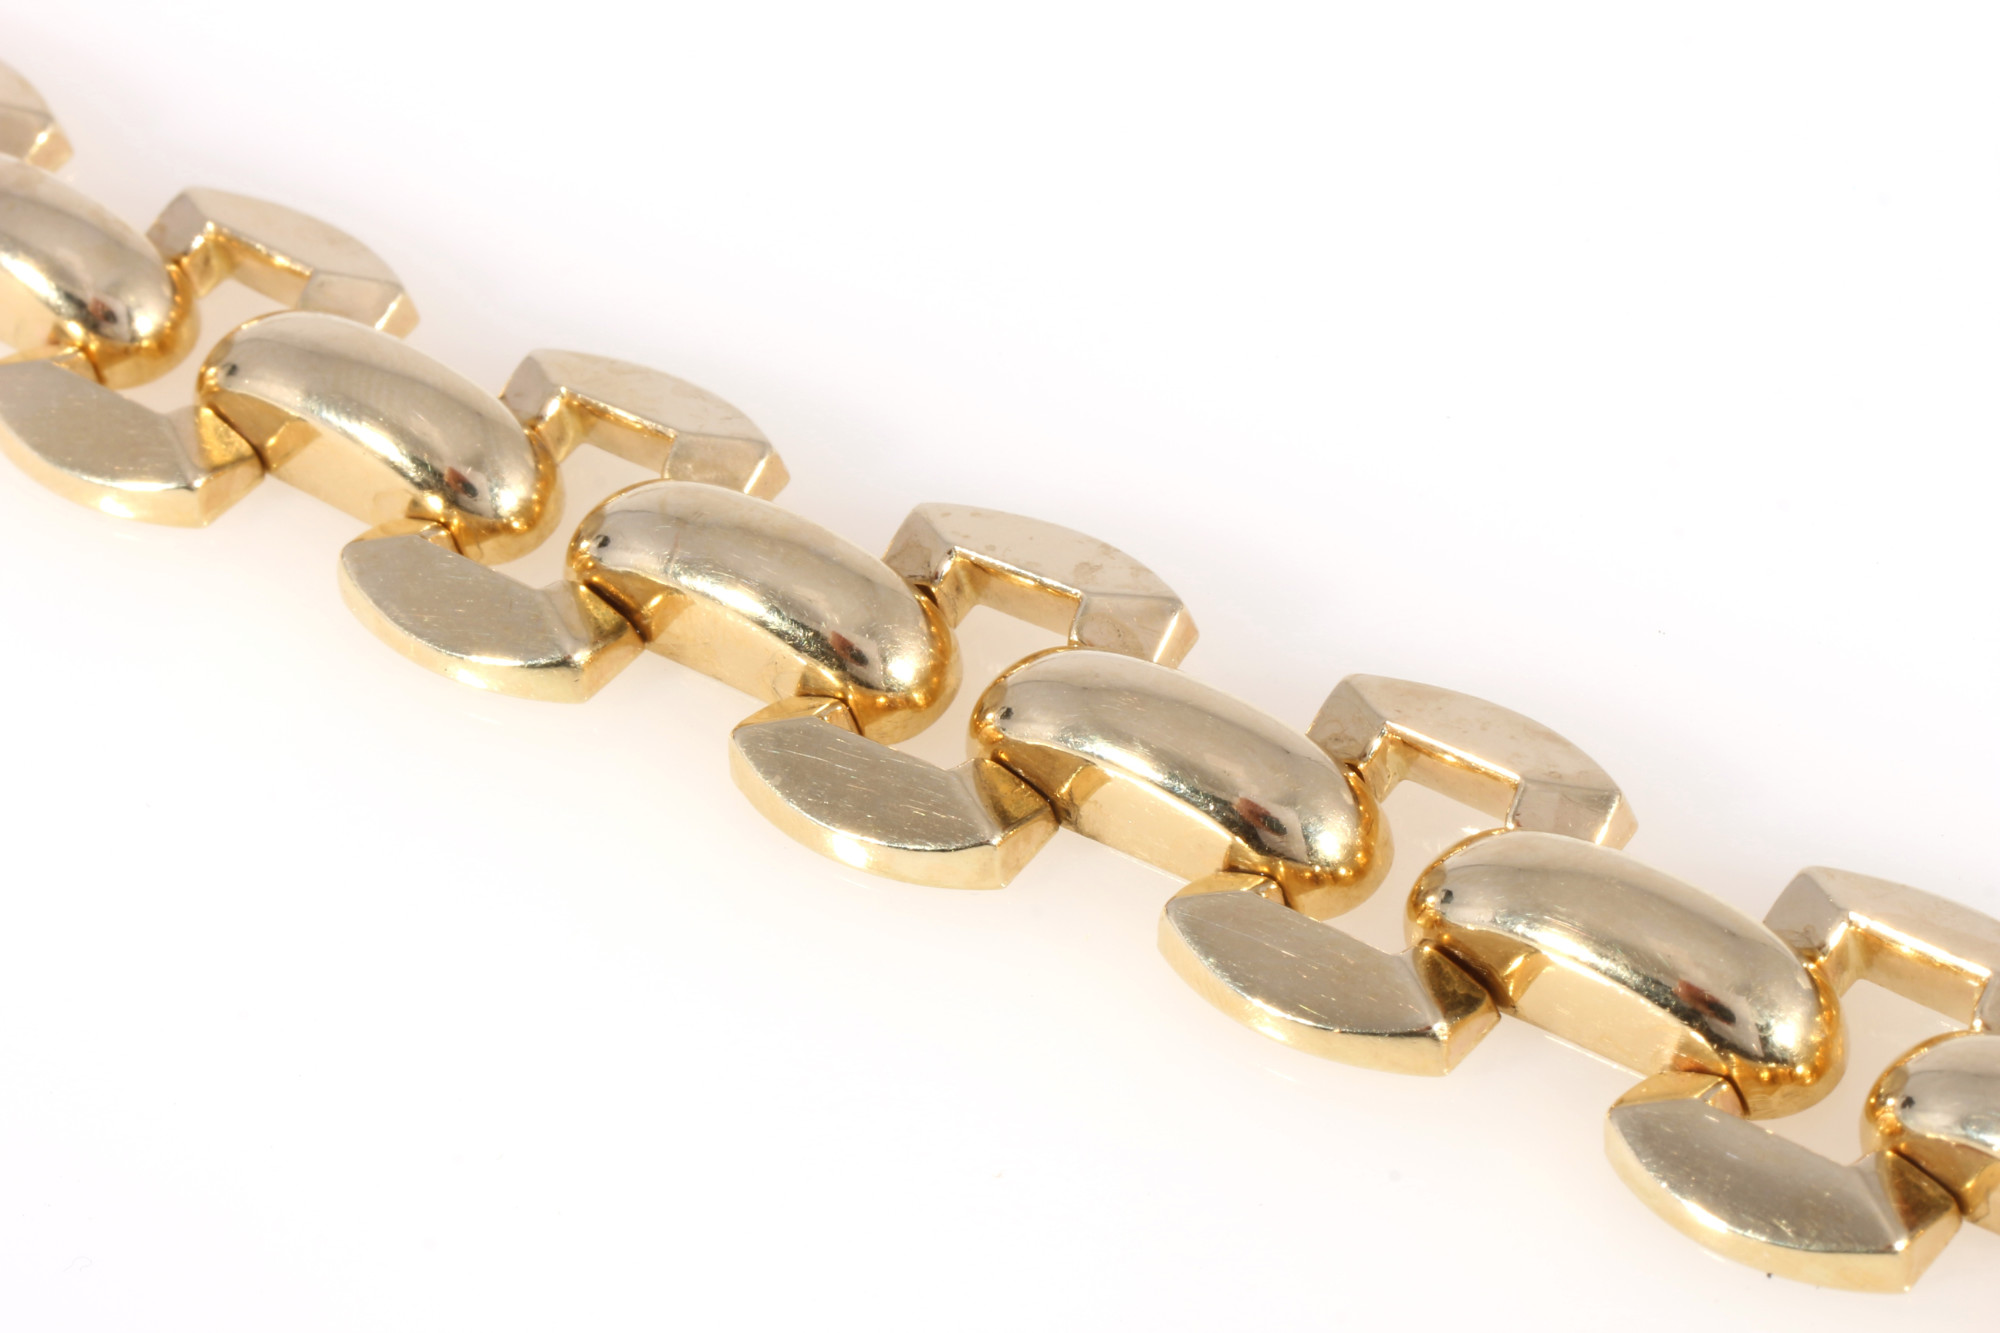 750 gold wide bracelet, 18K Gold breites Armband, - Image 2 of 3